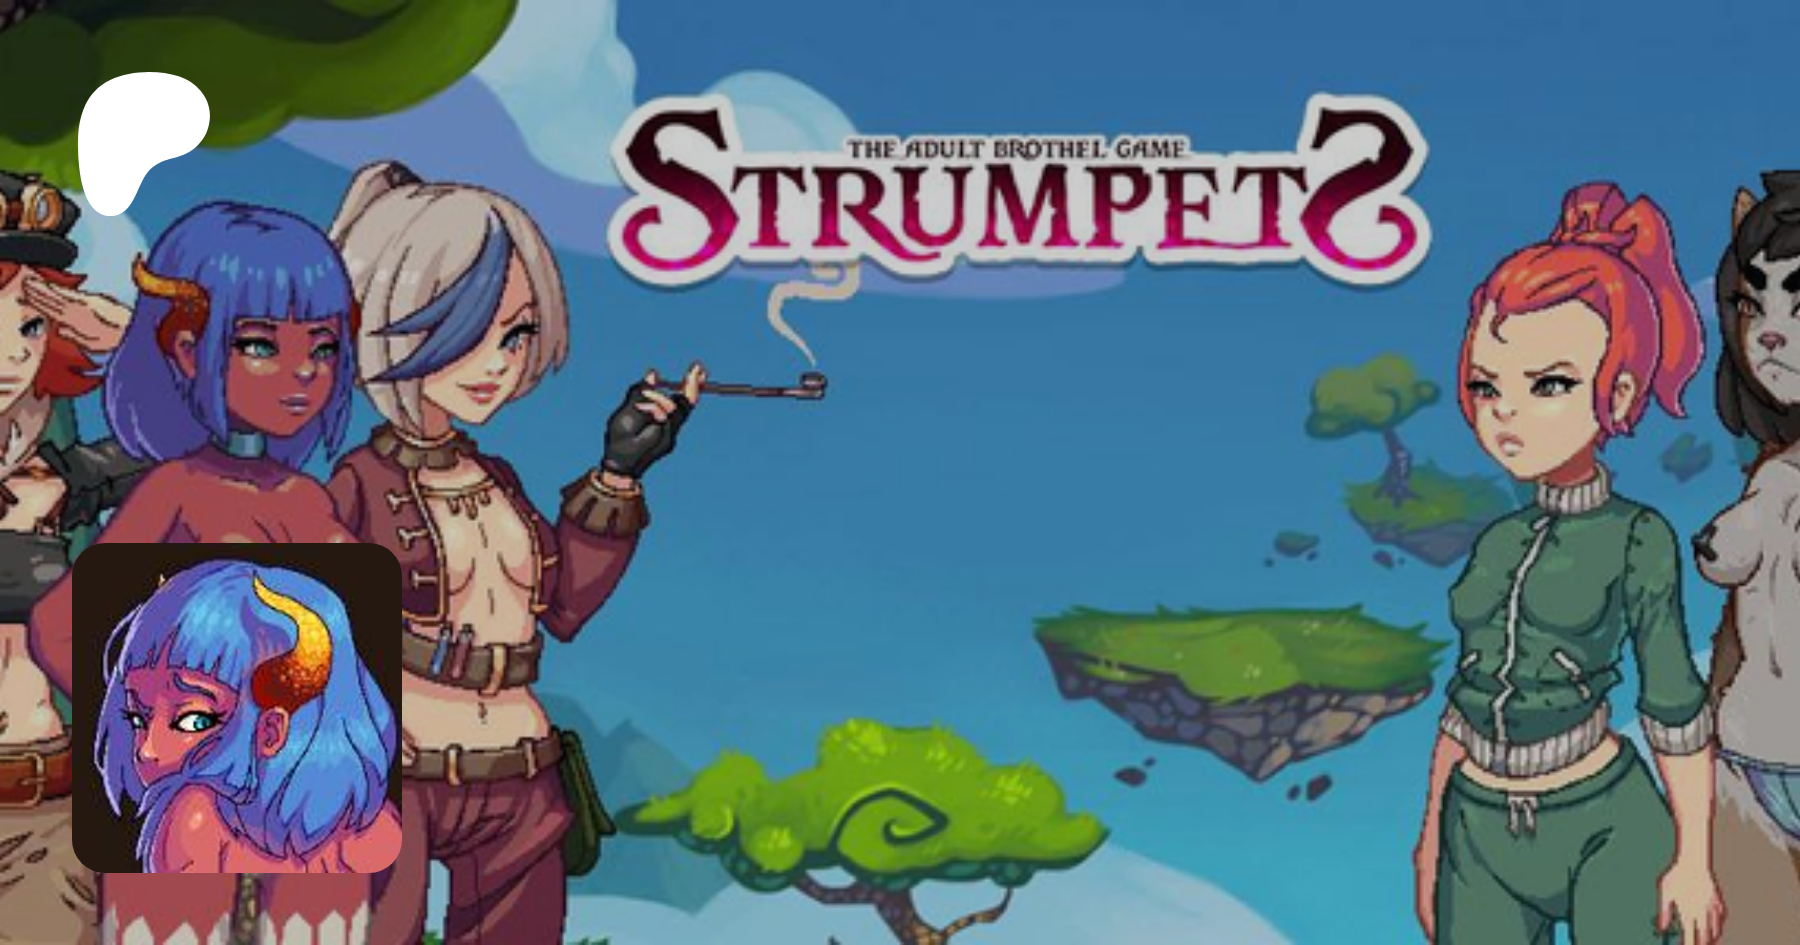 Strumpets | creating Games | Patreon